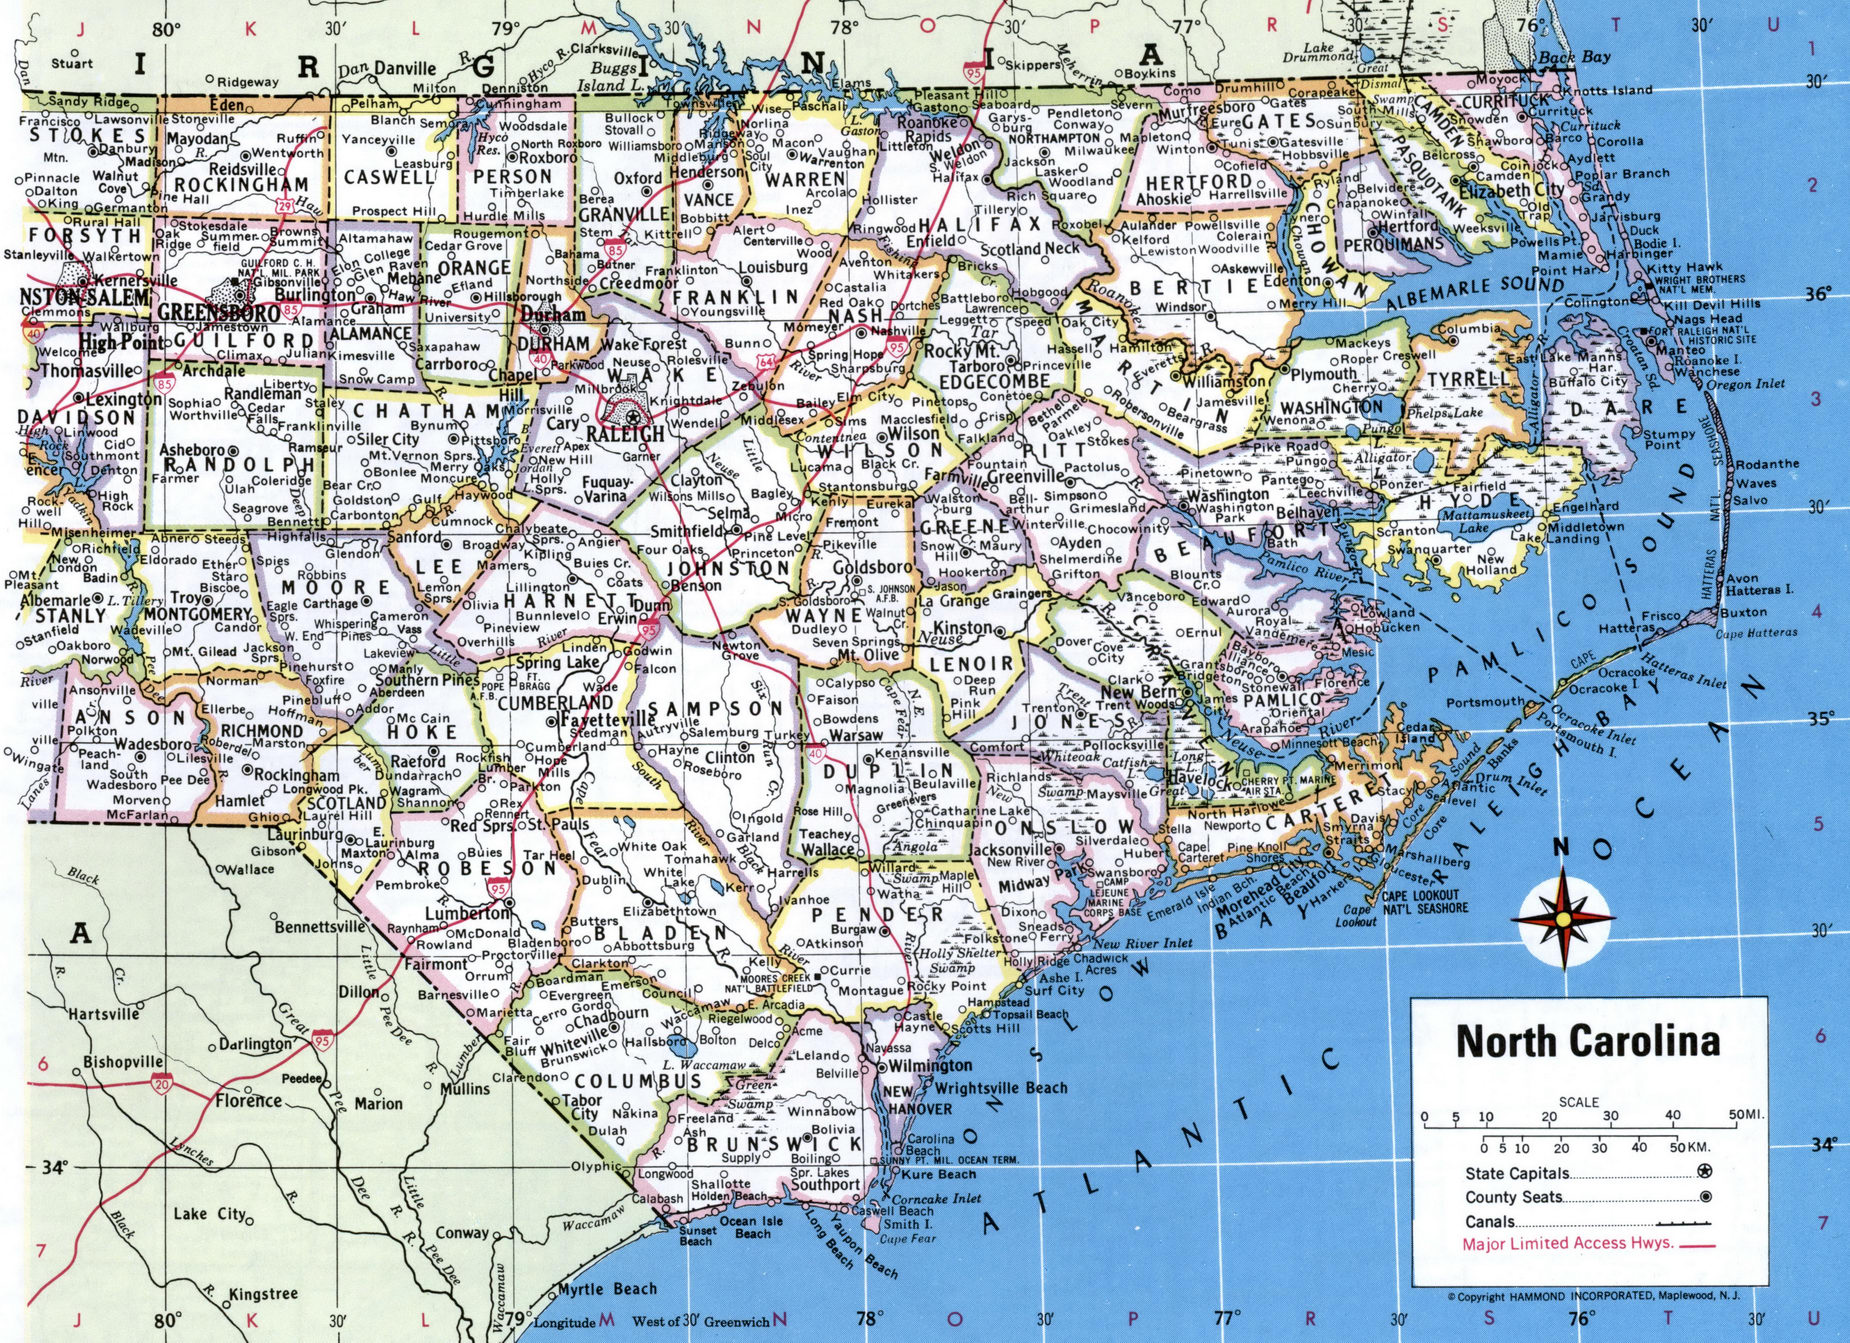 Map of North Carolina by county